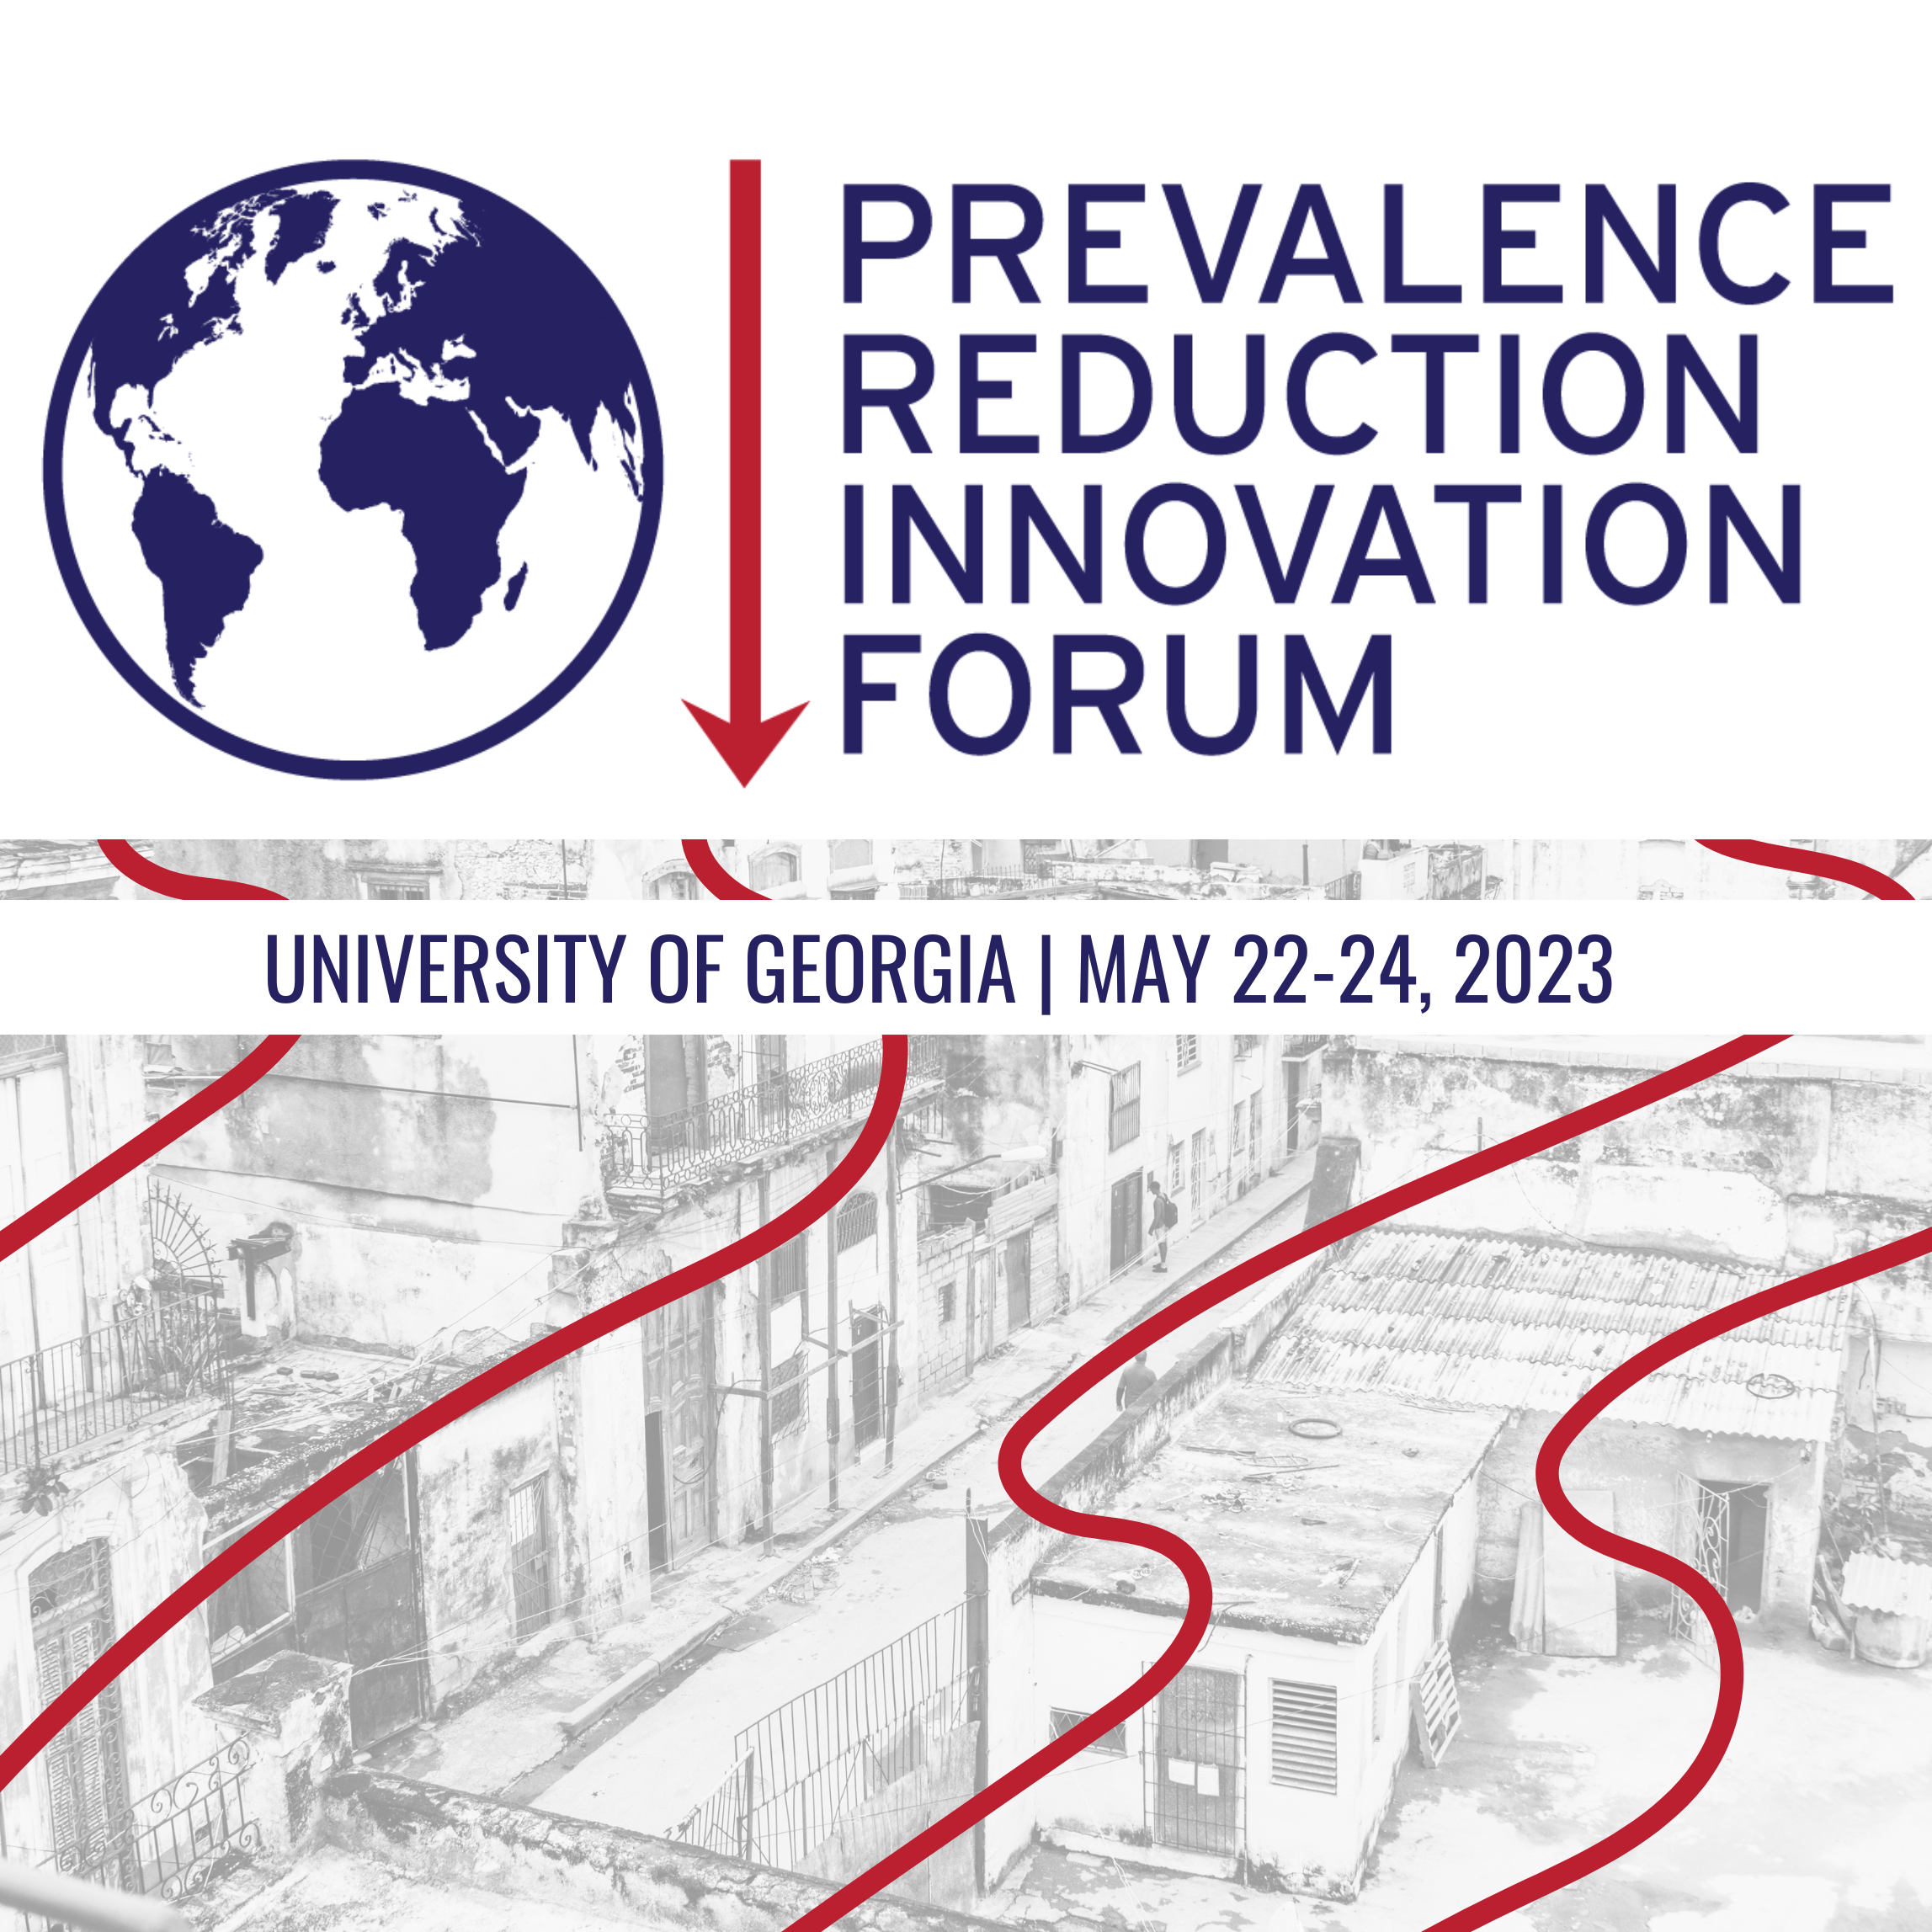 Prevalence Reduction Innovation Forum